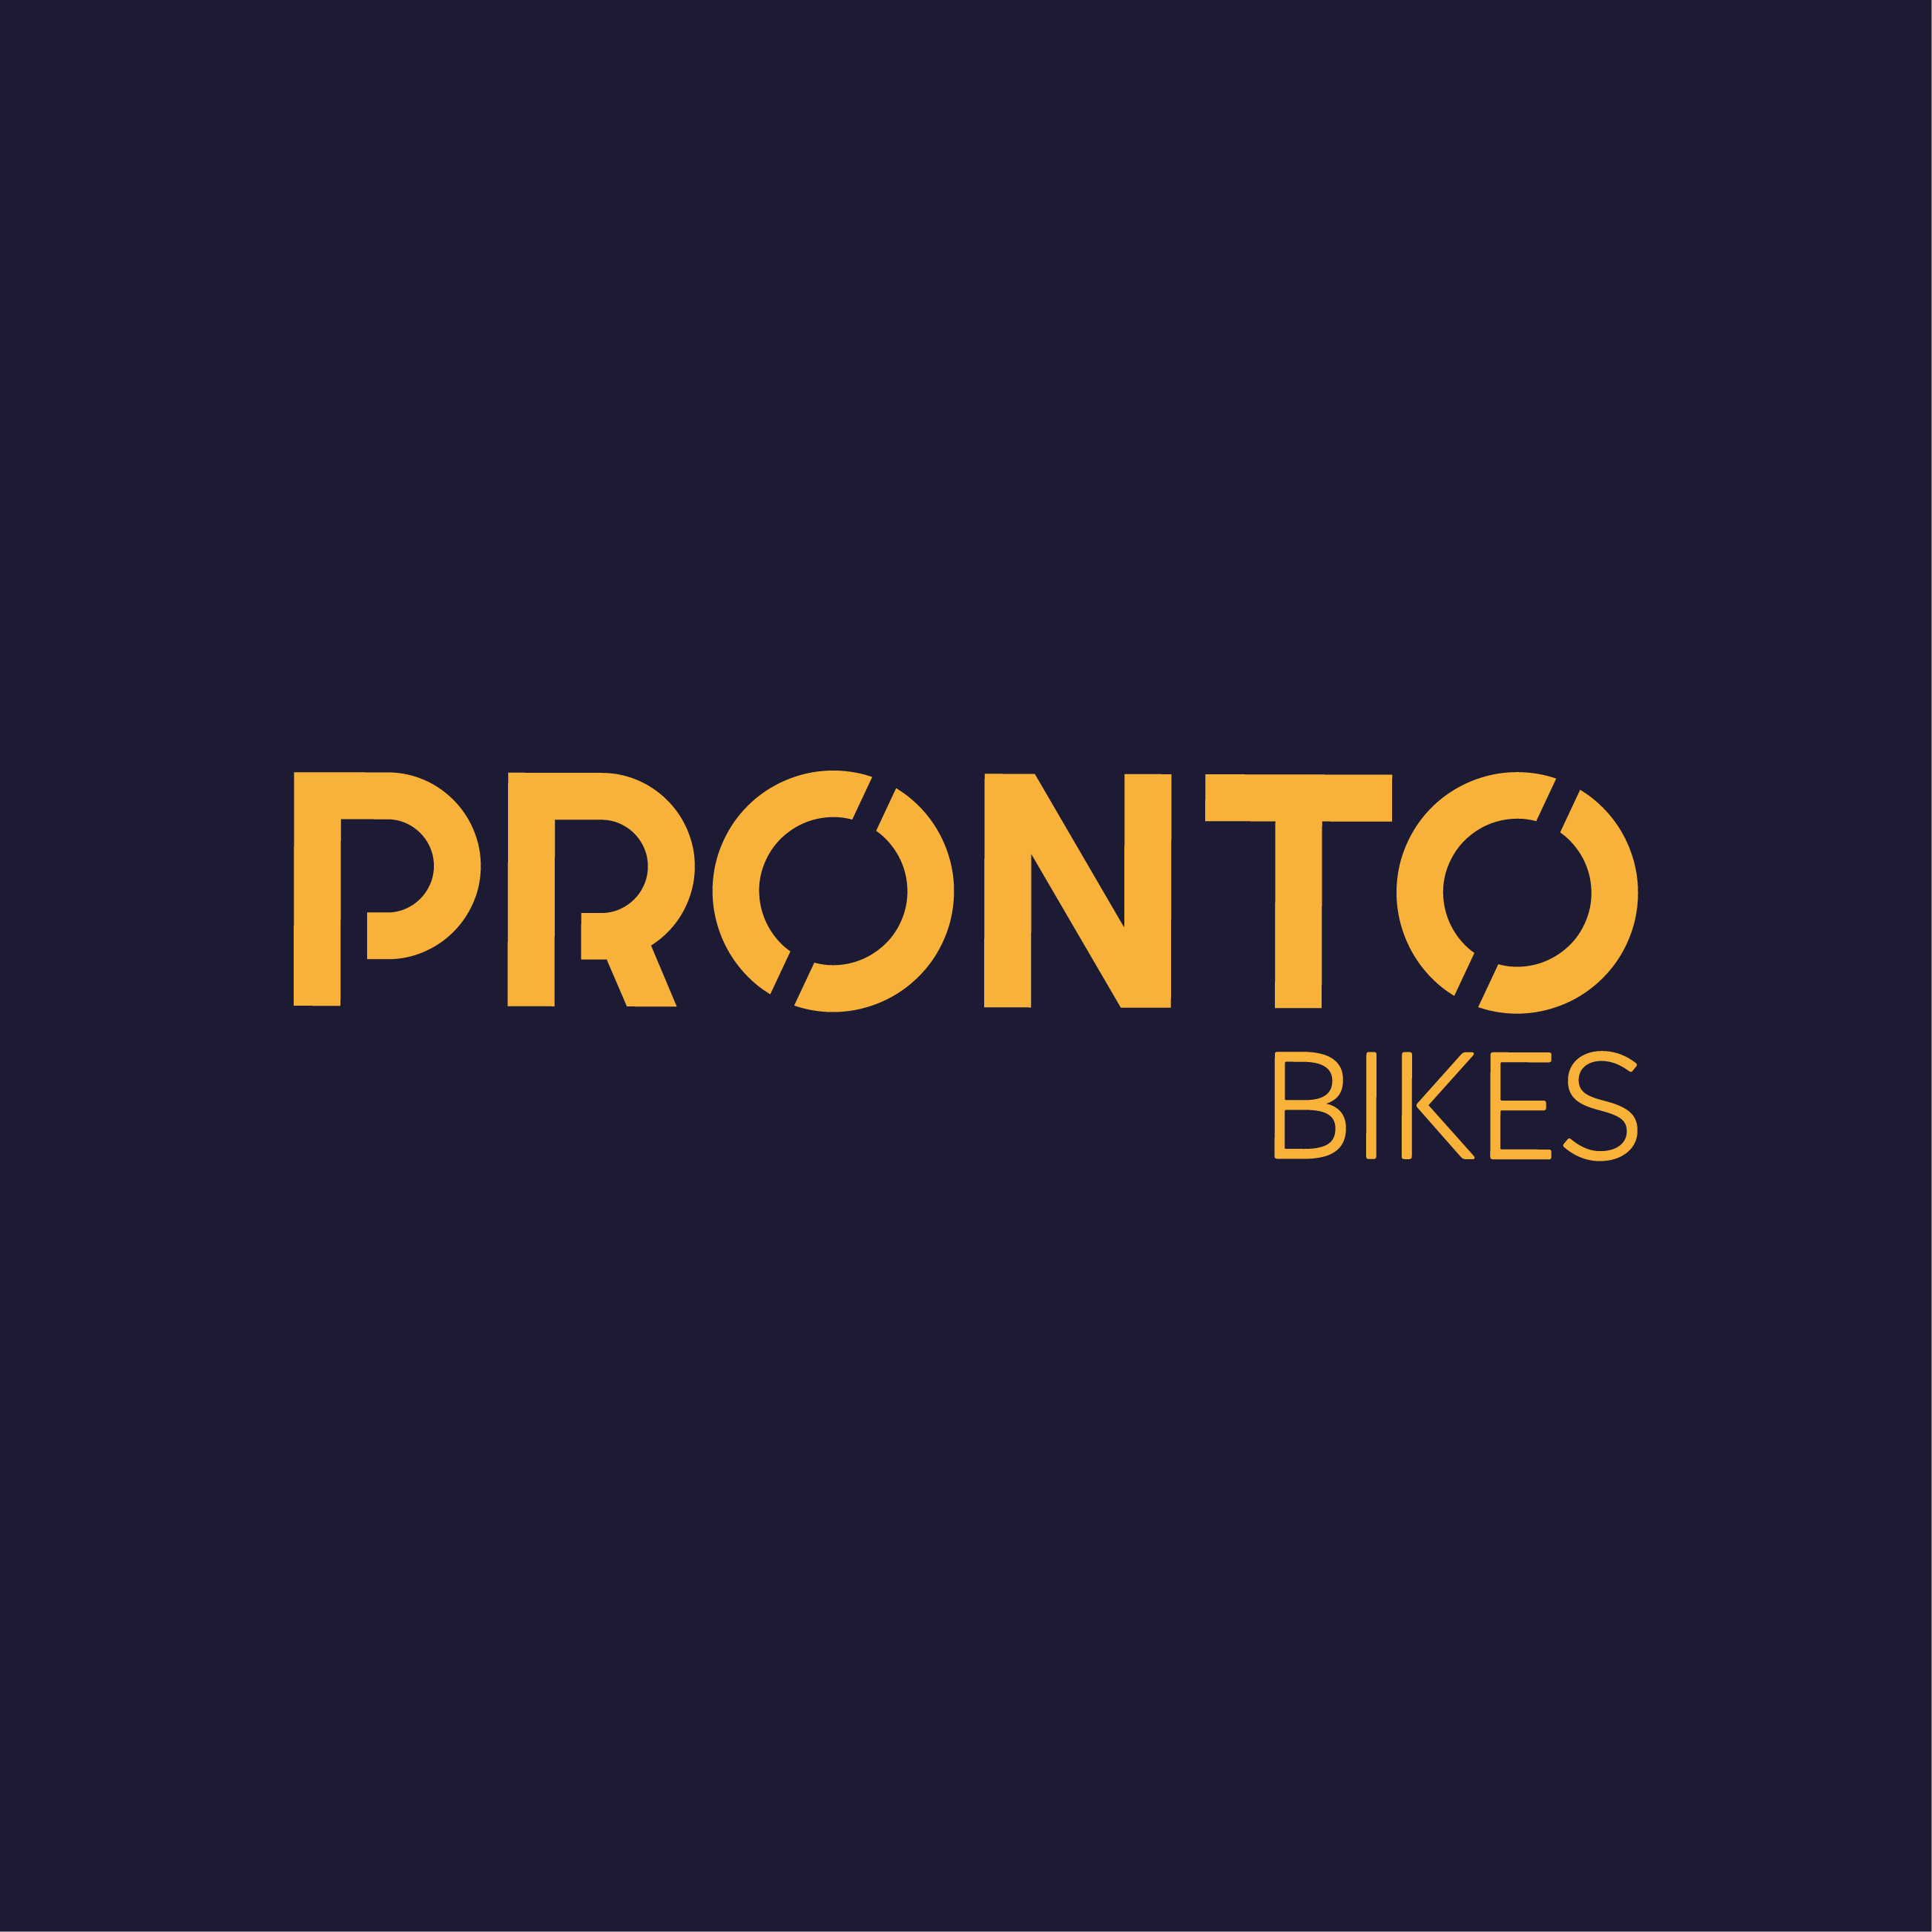 Club Image for PRONTO